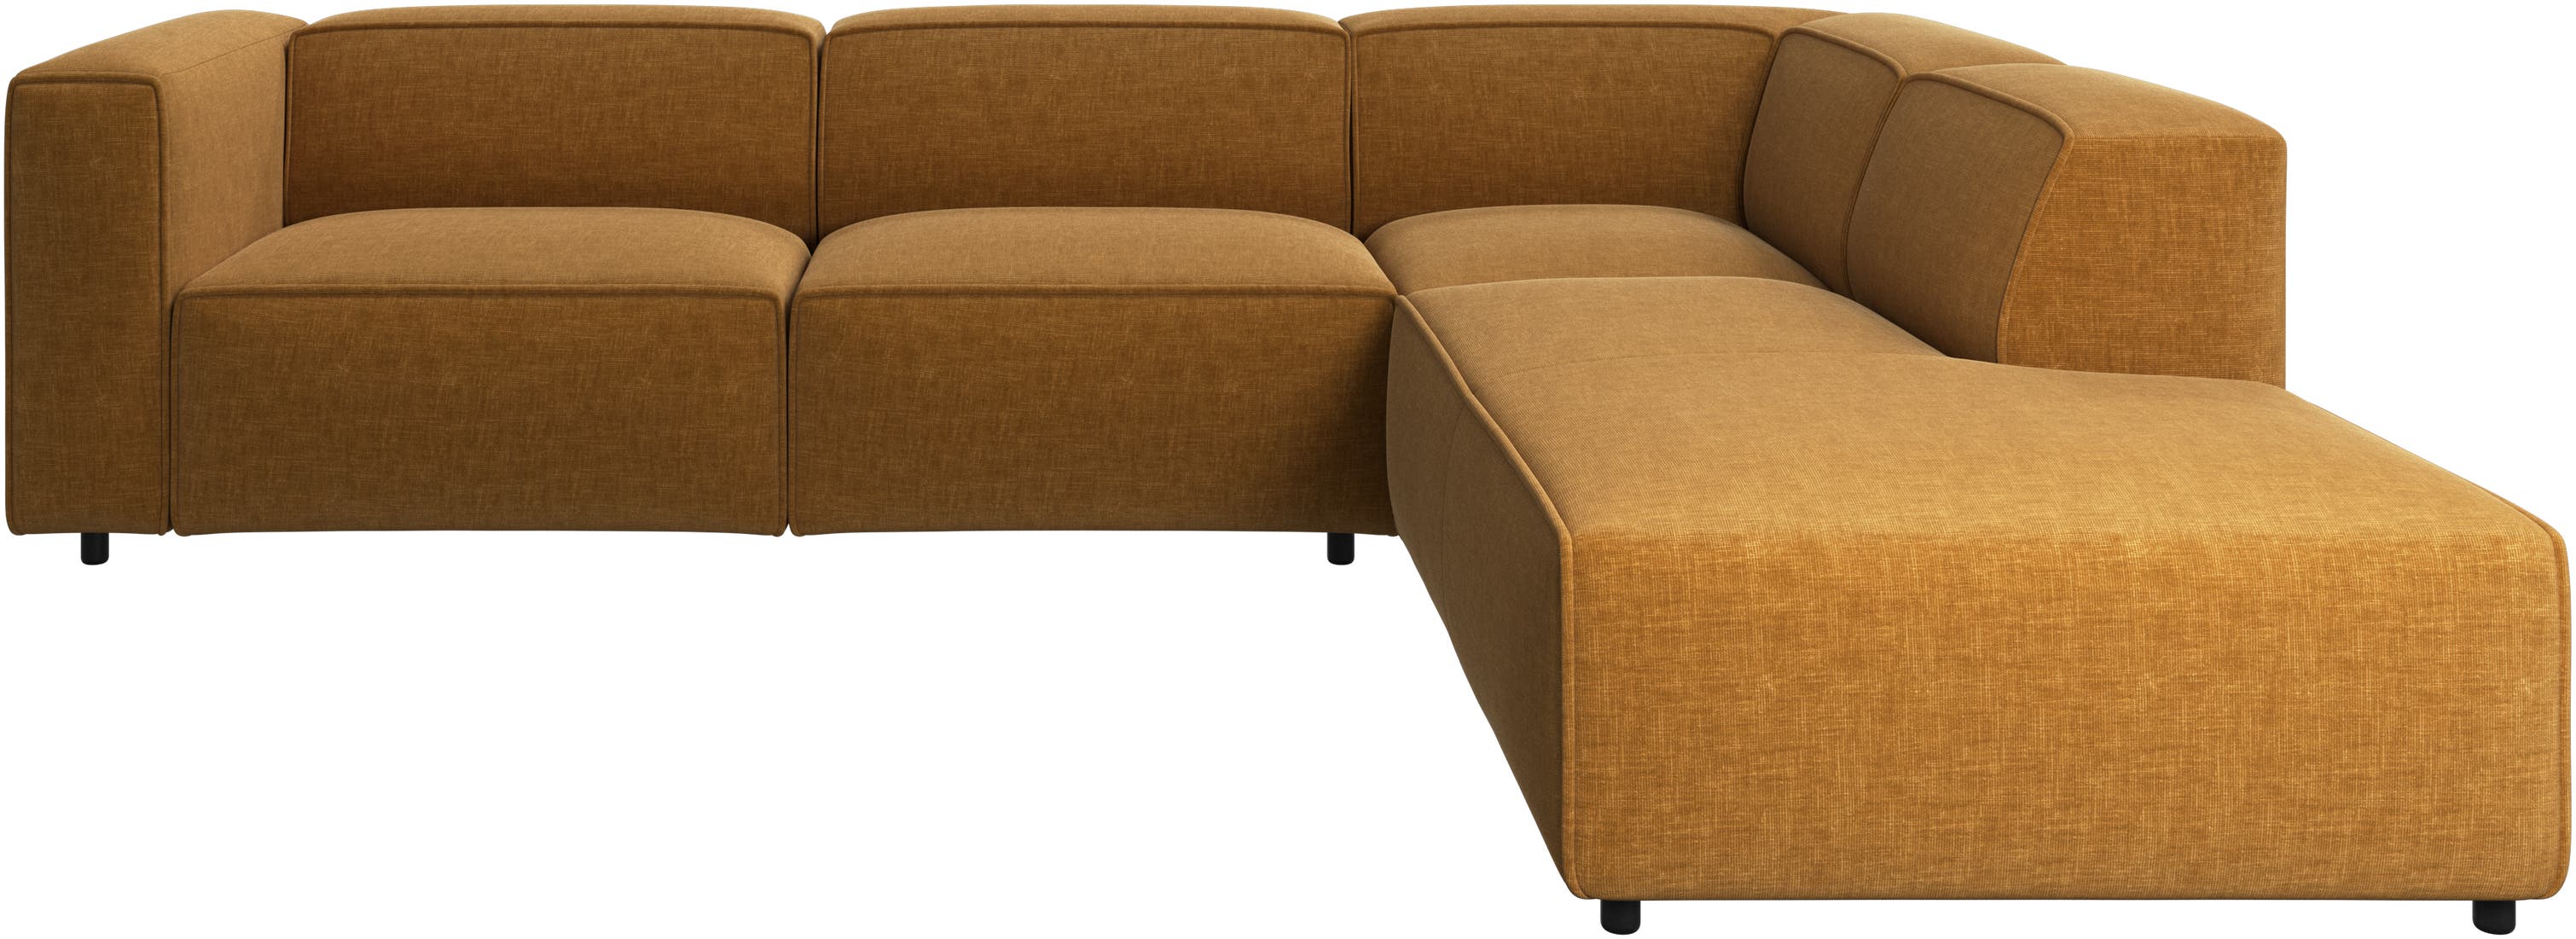 Canapé d'angle Carmo avec chaise longue